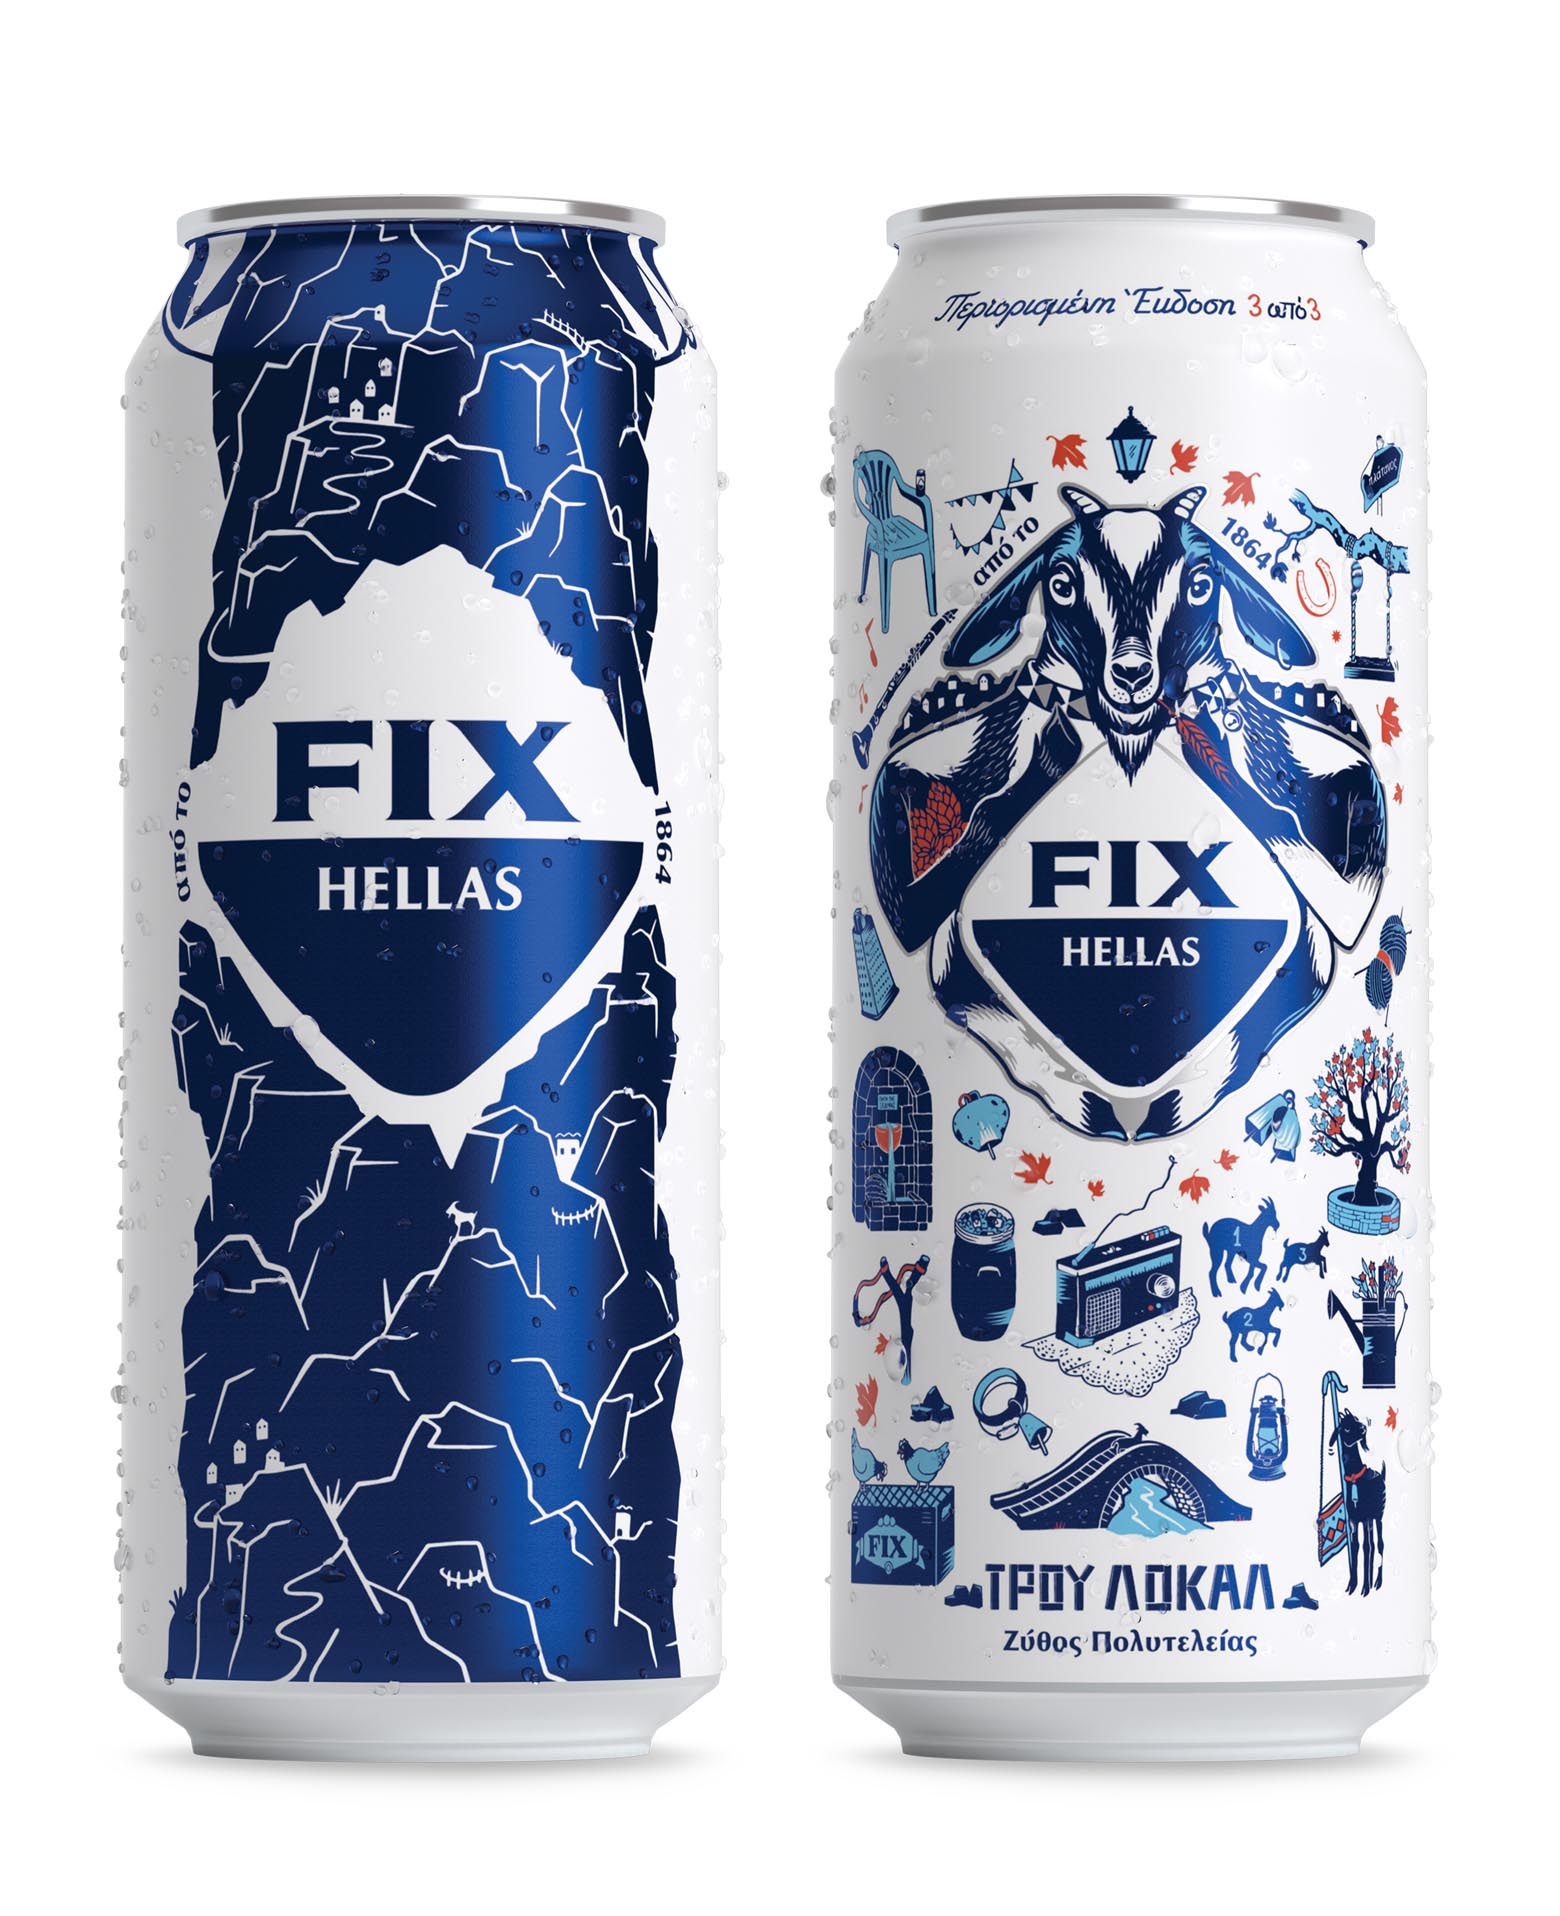 FIX Hellas啤酒包裝設計